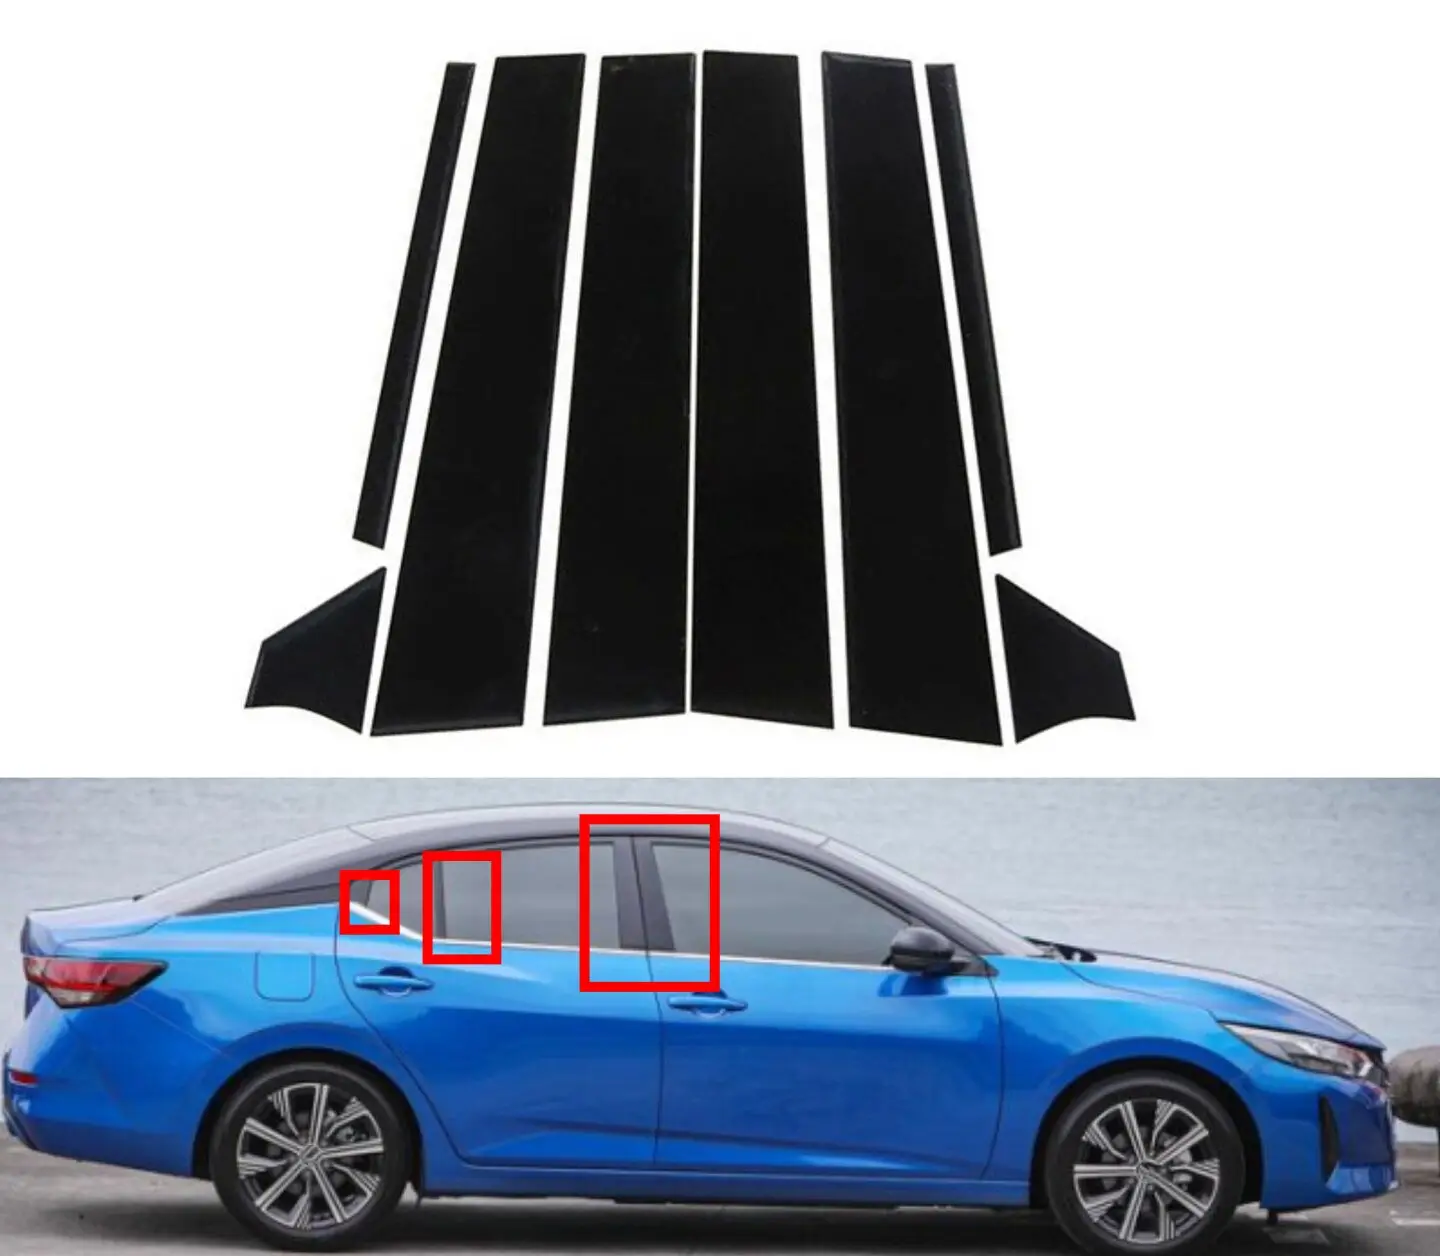 

8PCS Glossy Black Pillar Posts For Nissan Sentra 2020 2021 2022 Car Door Window Polished Pillar Posts Trim Covers